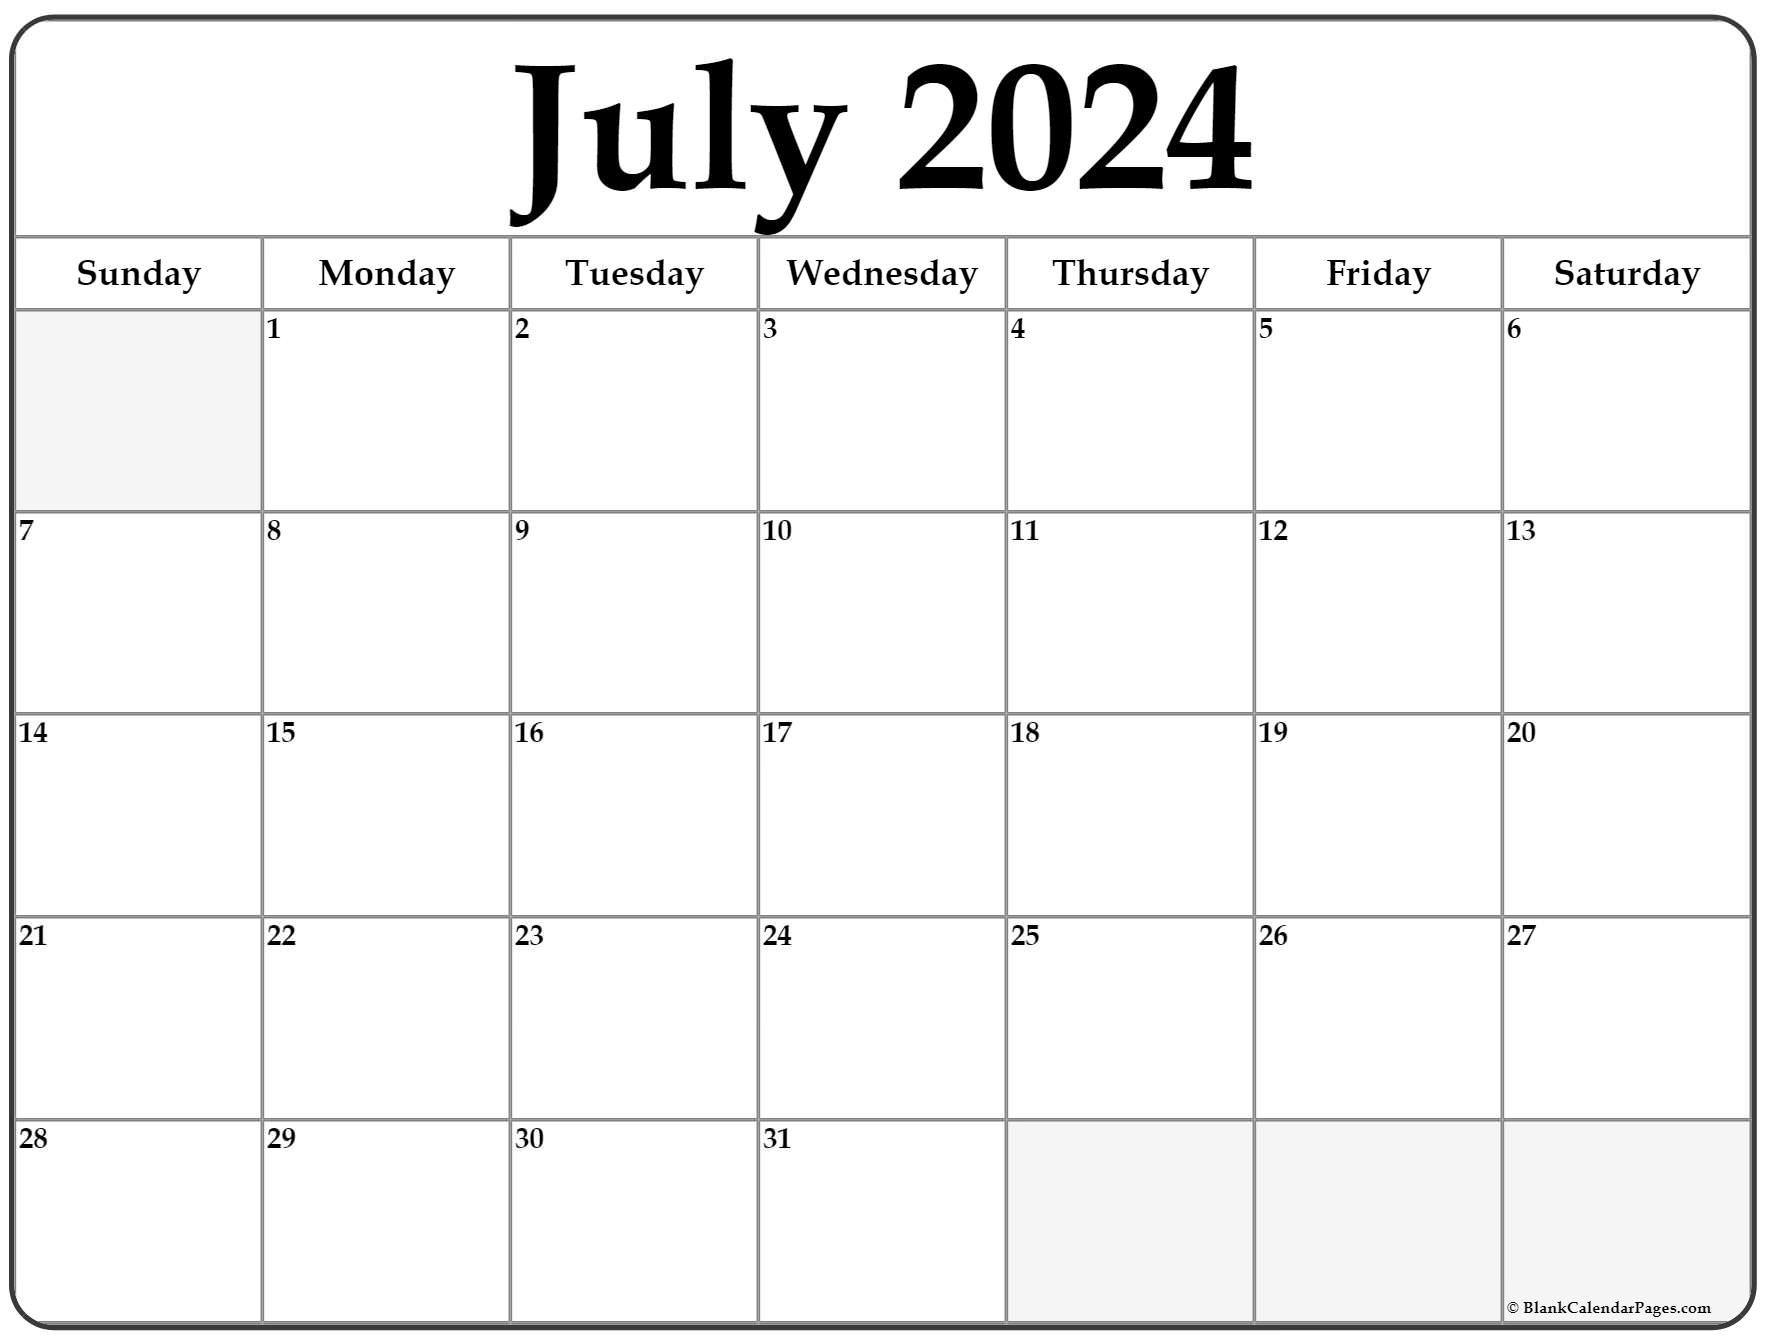 June 2022 Printable Calendar July 2022 Calendar | Free Printable Calendar Templates